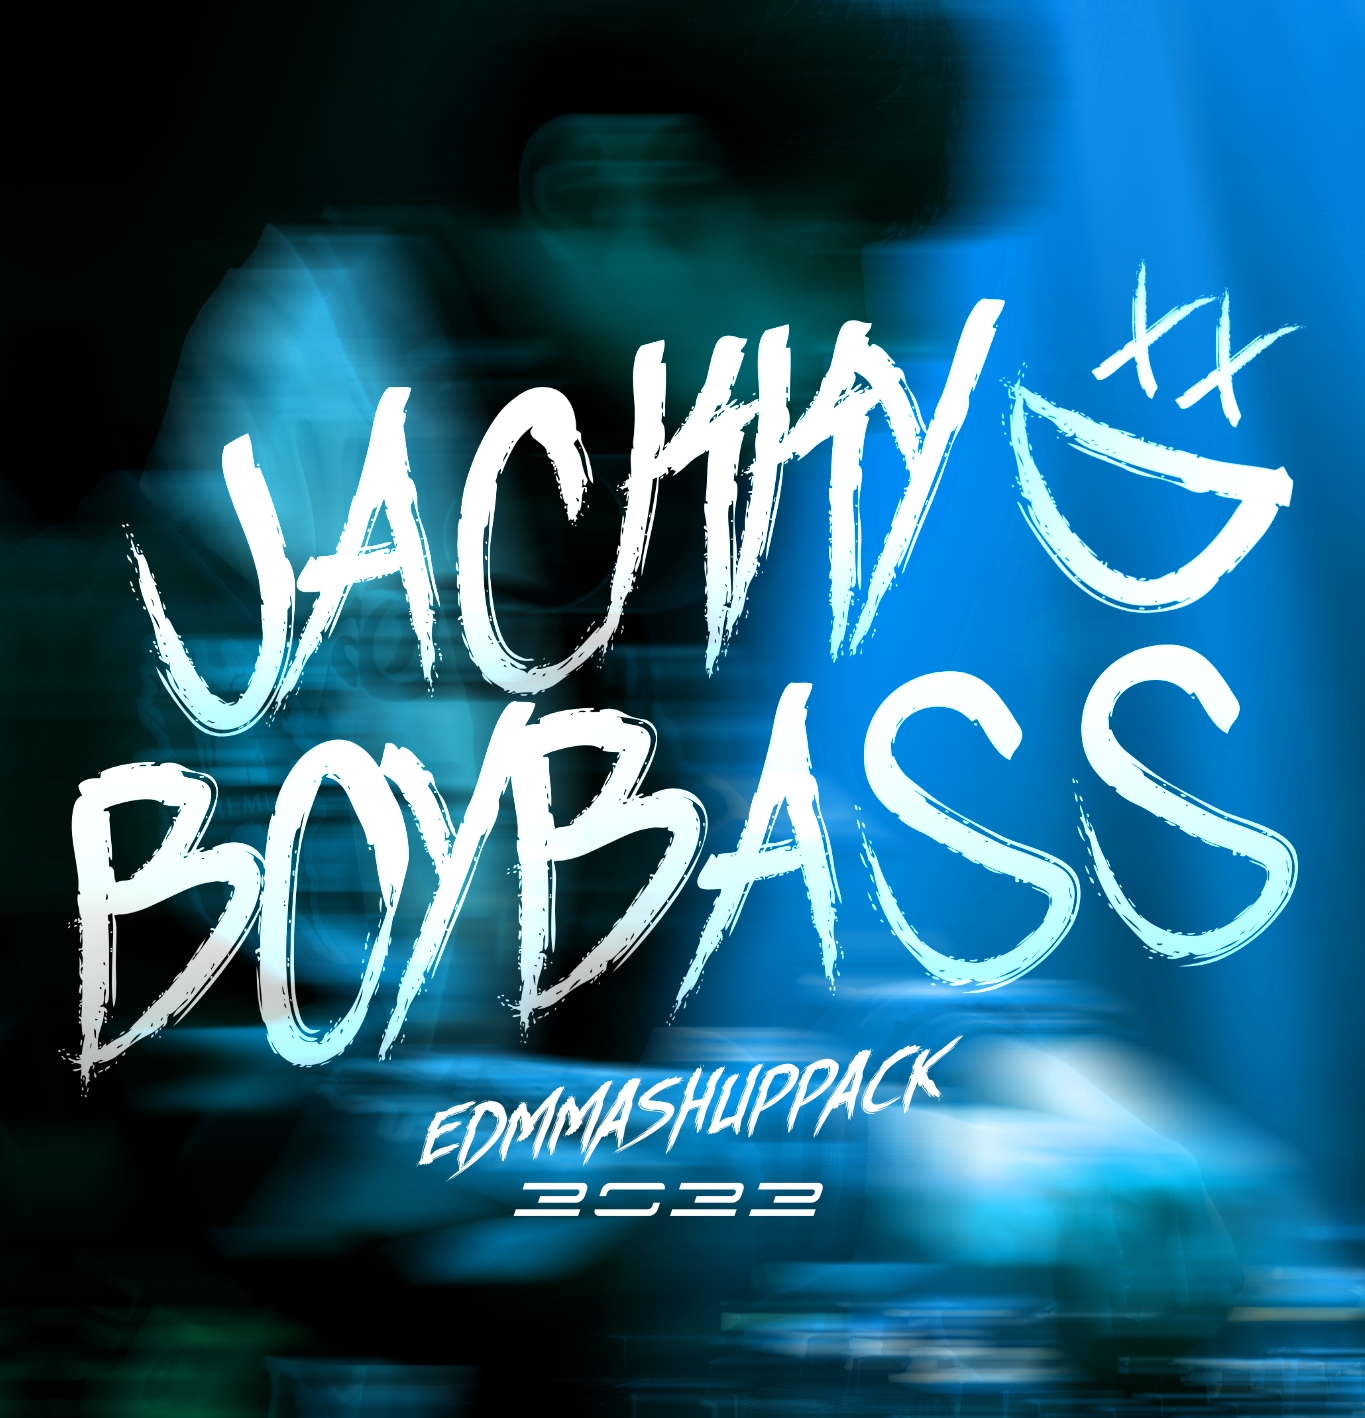 BoyBass EDM Mashup Pack 2022